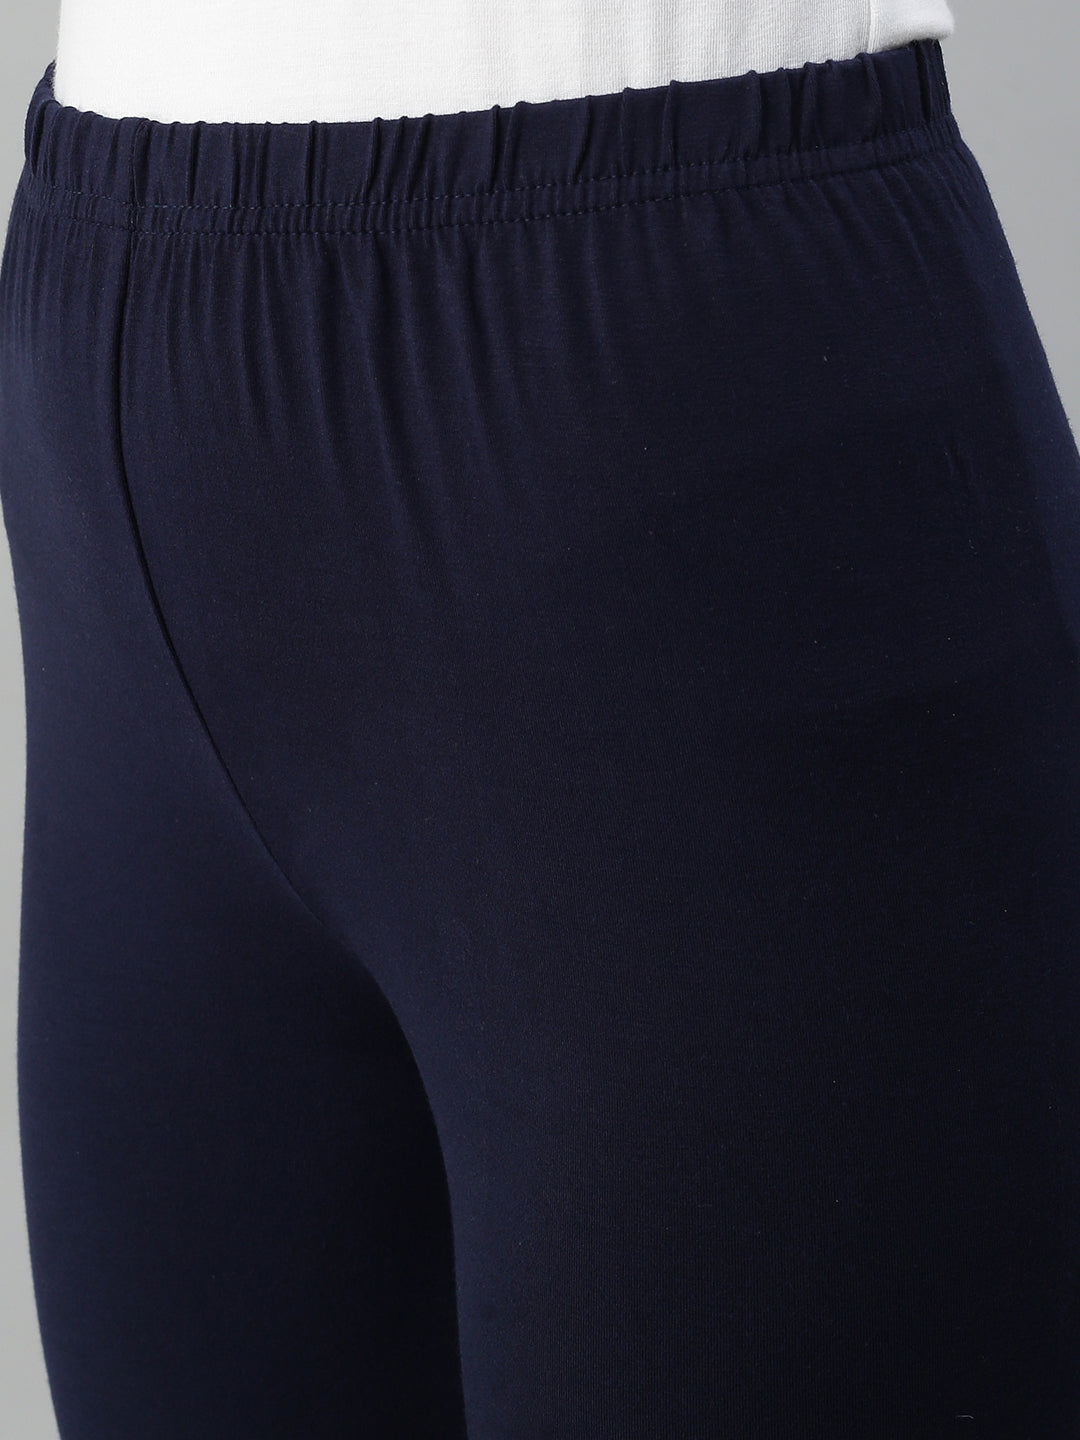 Women Cotton Lycra Leggings Solid Regular and Plus for Women Yoga Paint  Grey | eBay